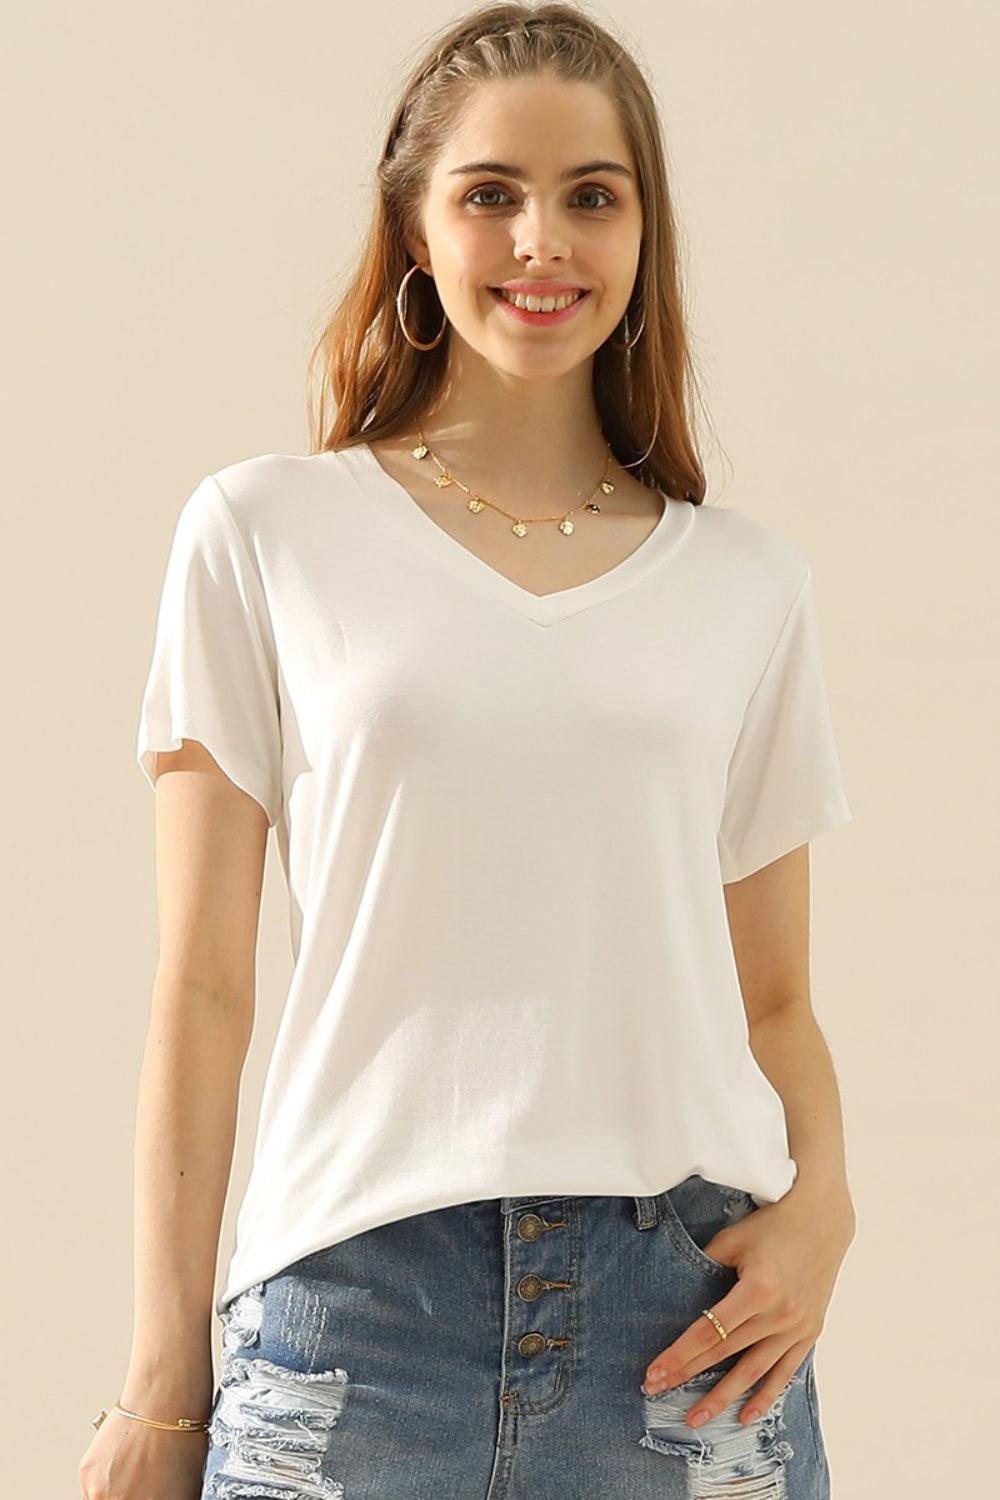 Ninexis Full Size V-Neck Short Sleeve T-Shirt T-Shirts